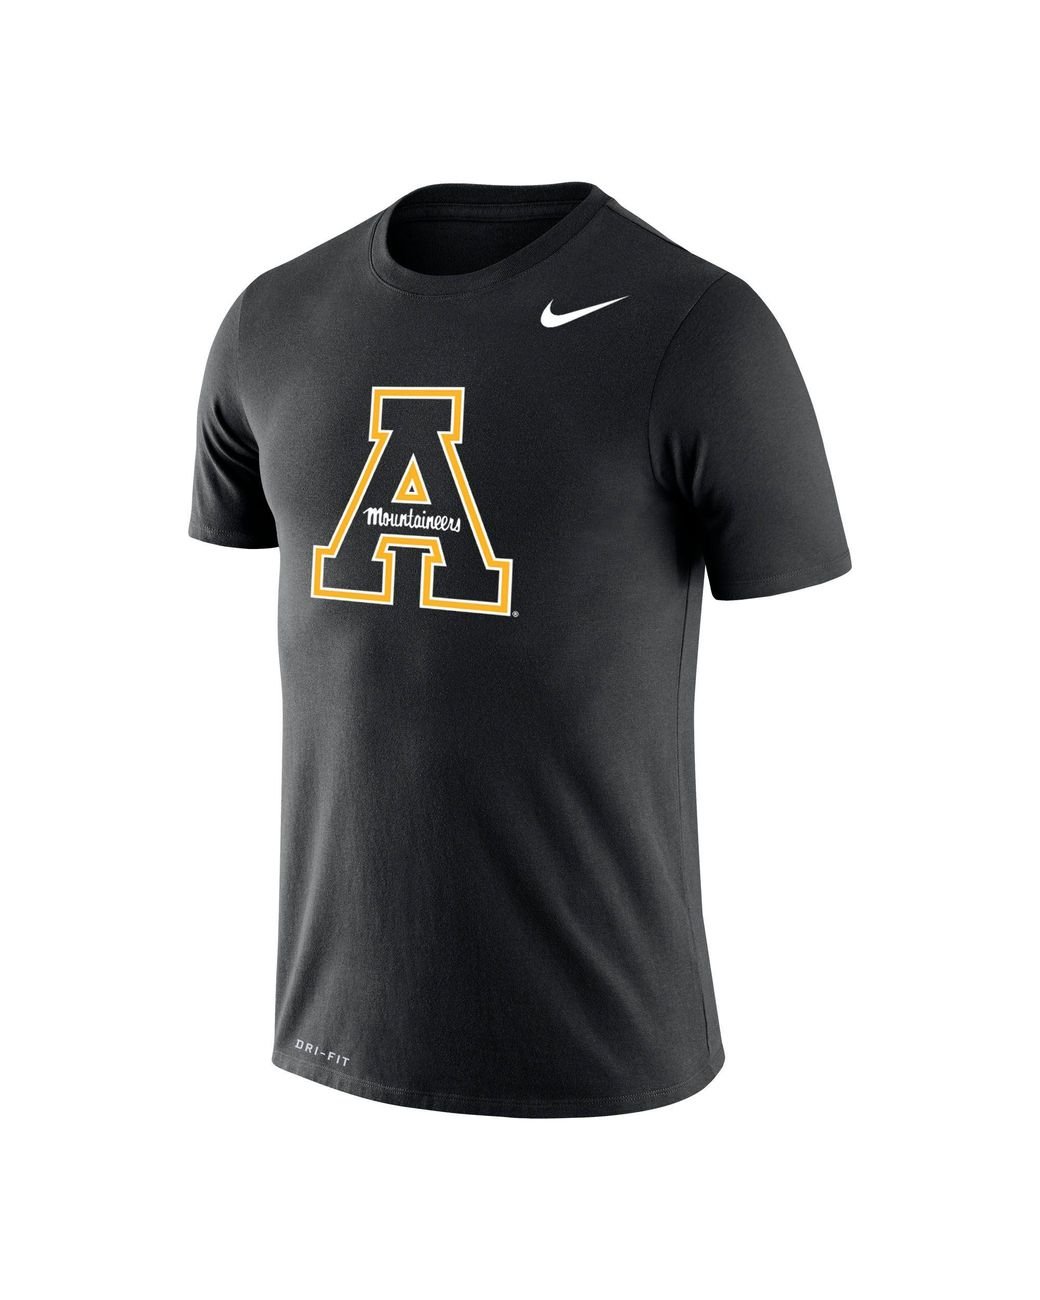 Nike Appalachian State Black Logo Legend Performance T-shirt for Men ...